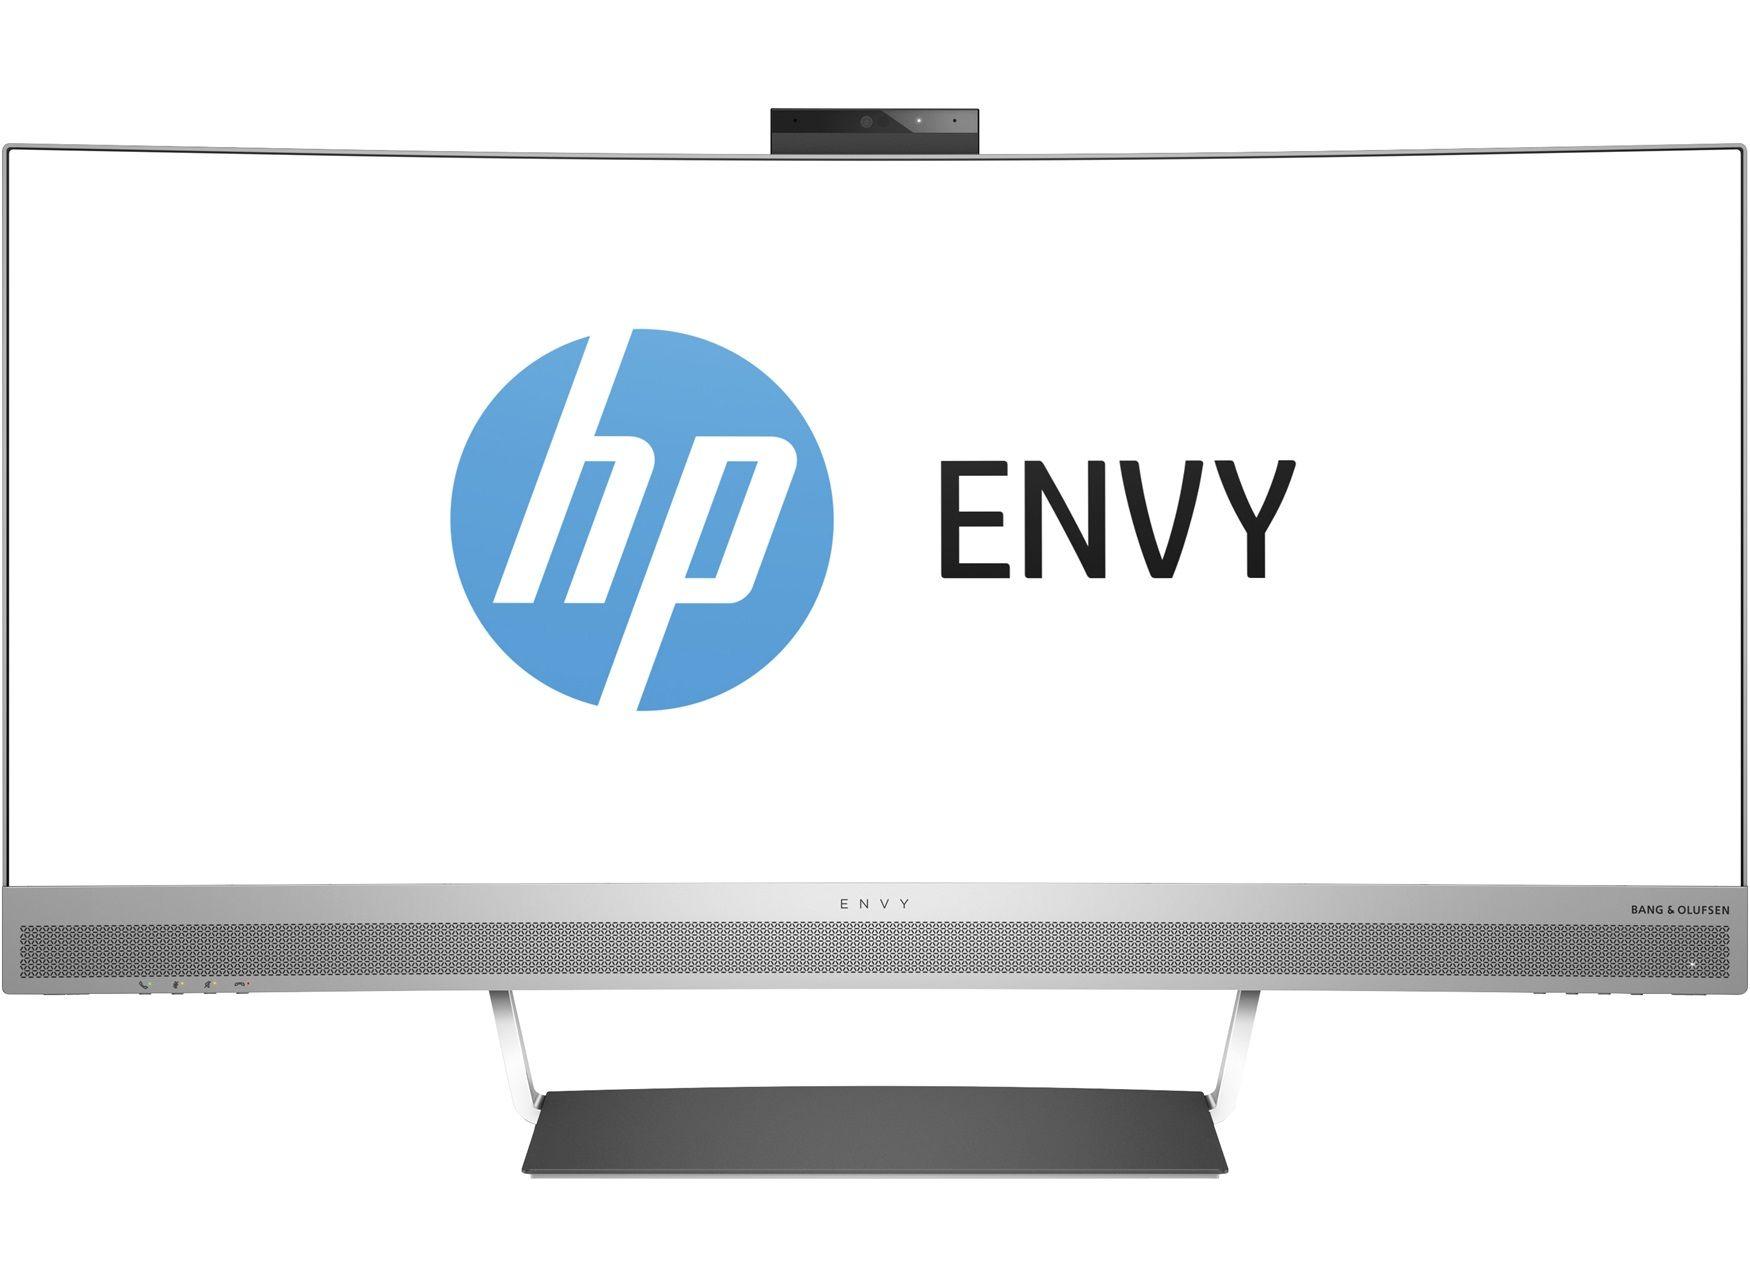 HP ENVY Logo - HP ENVY 34 34-inch Display - HP Store Canada